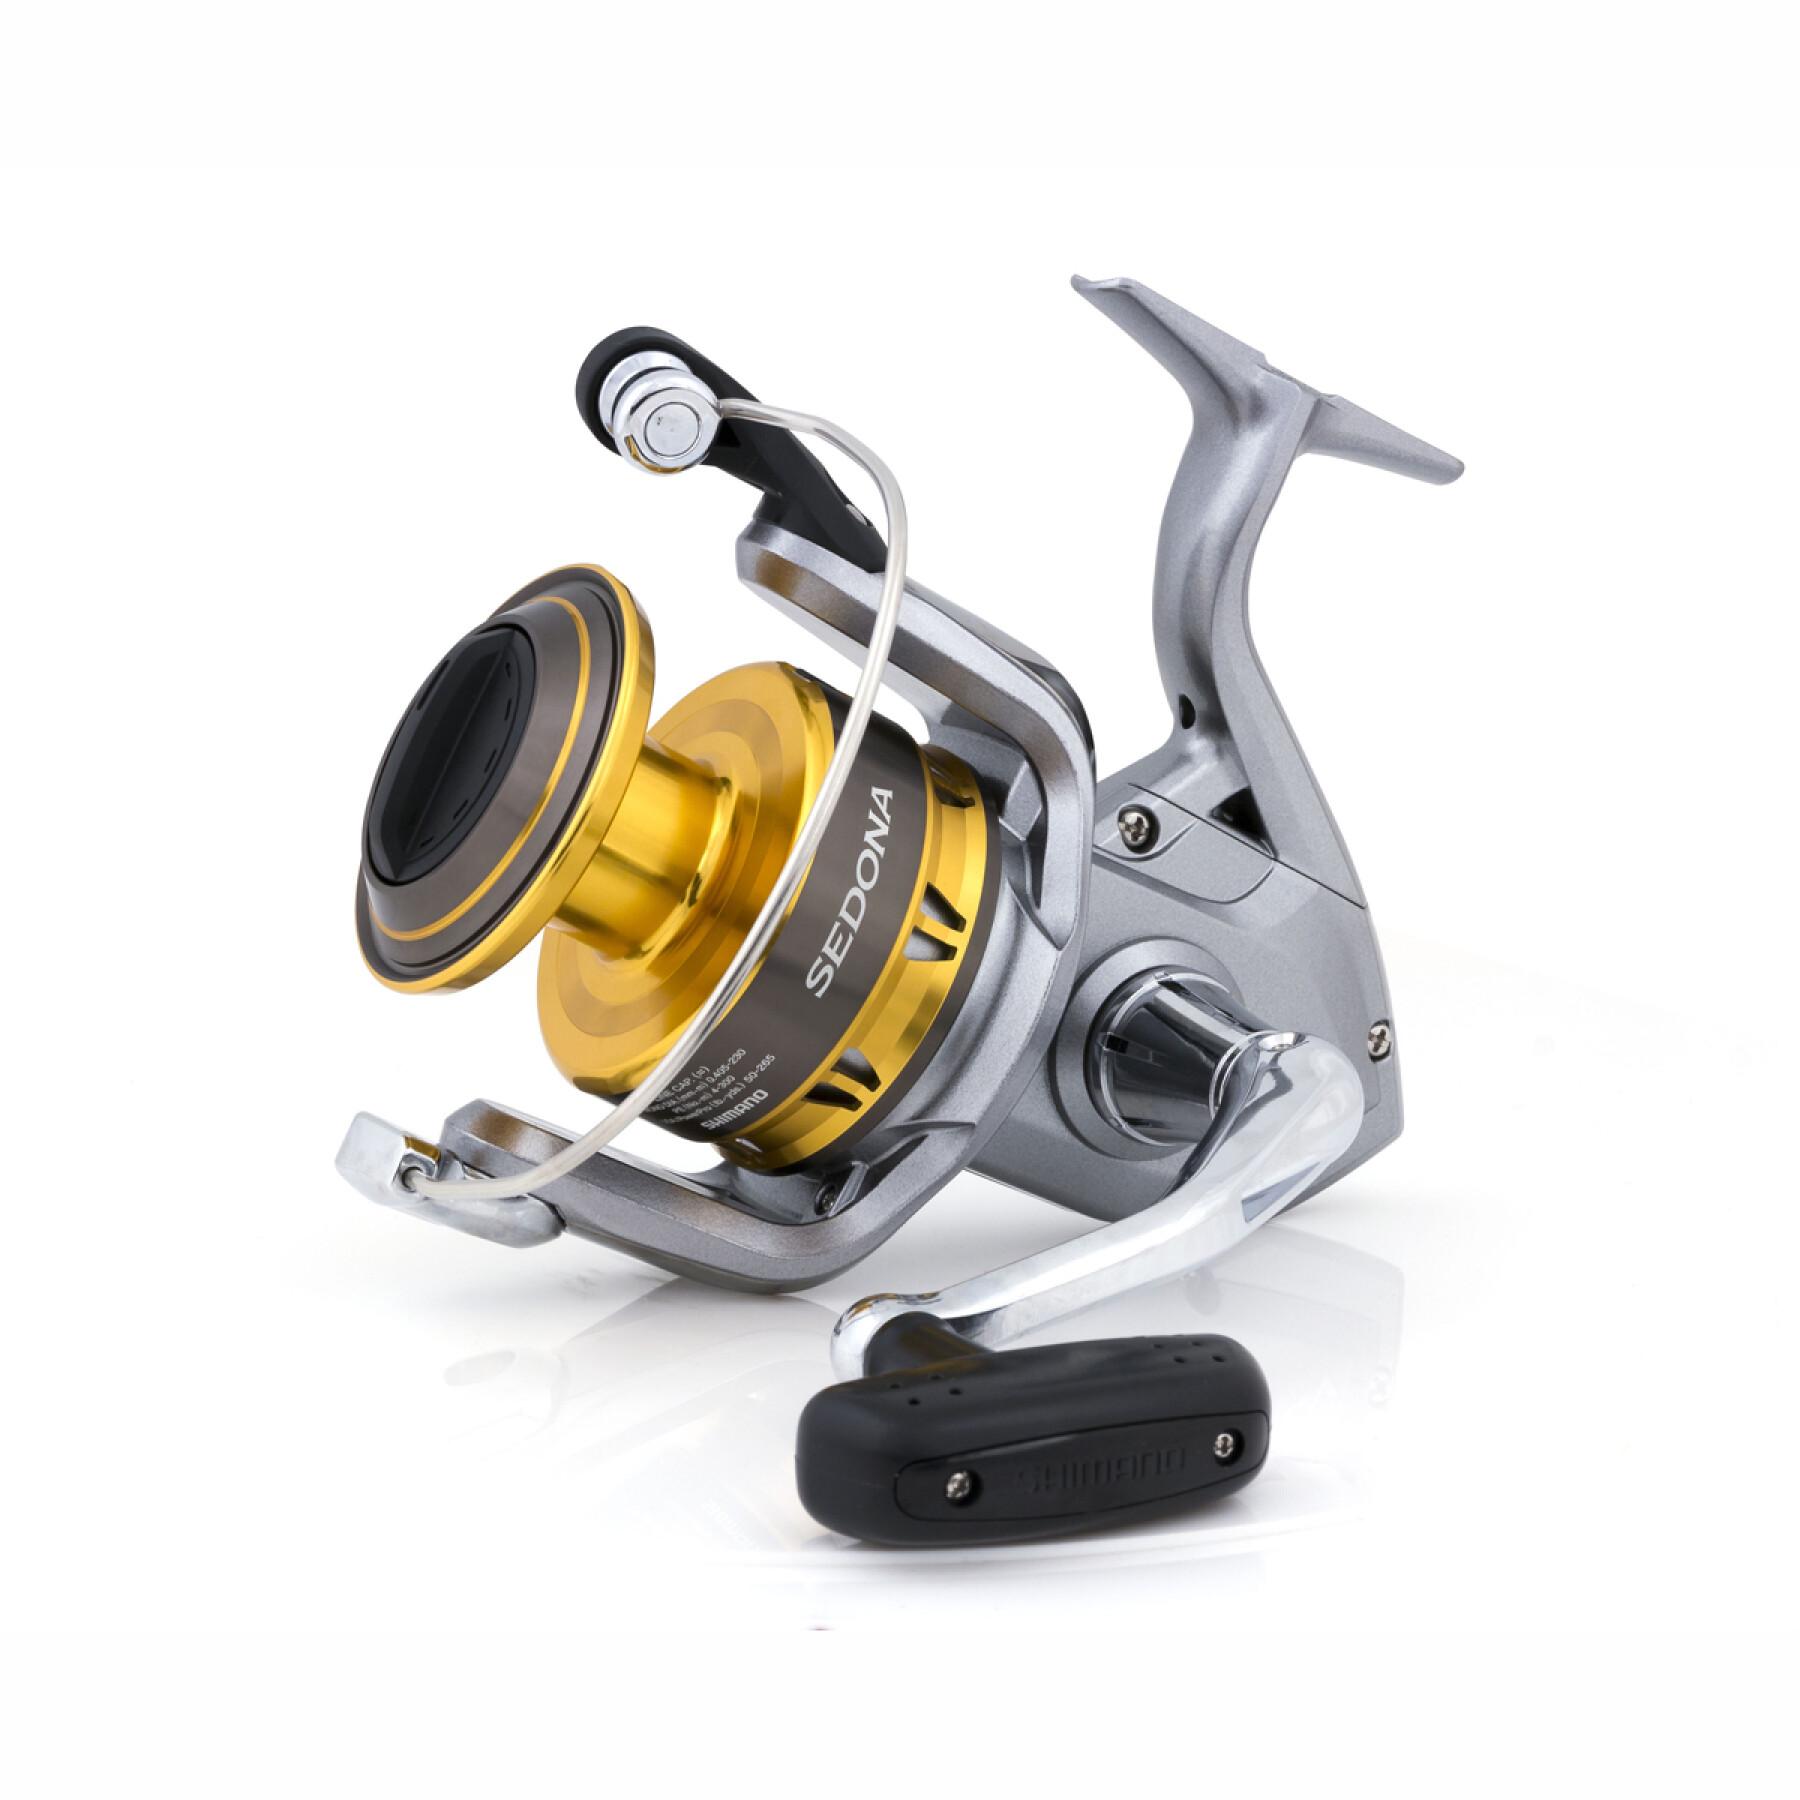 Reel Shimano Sedona FI 4000 XG - Shimano - Best Brands - Fishing